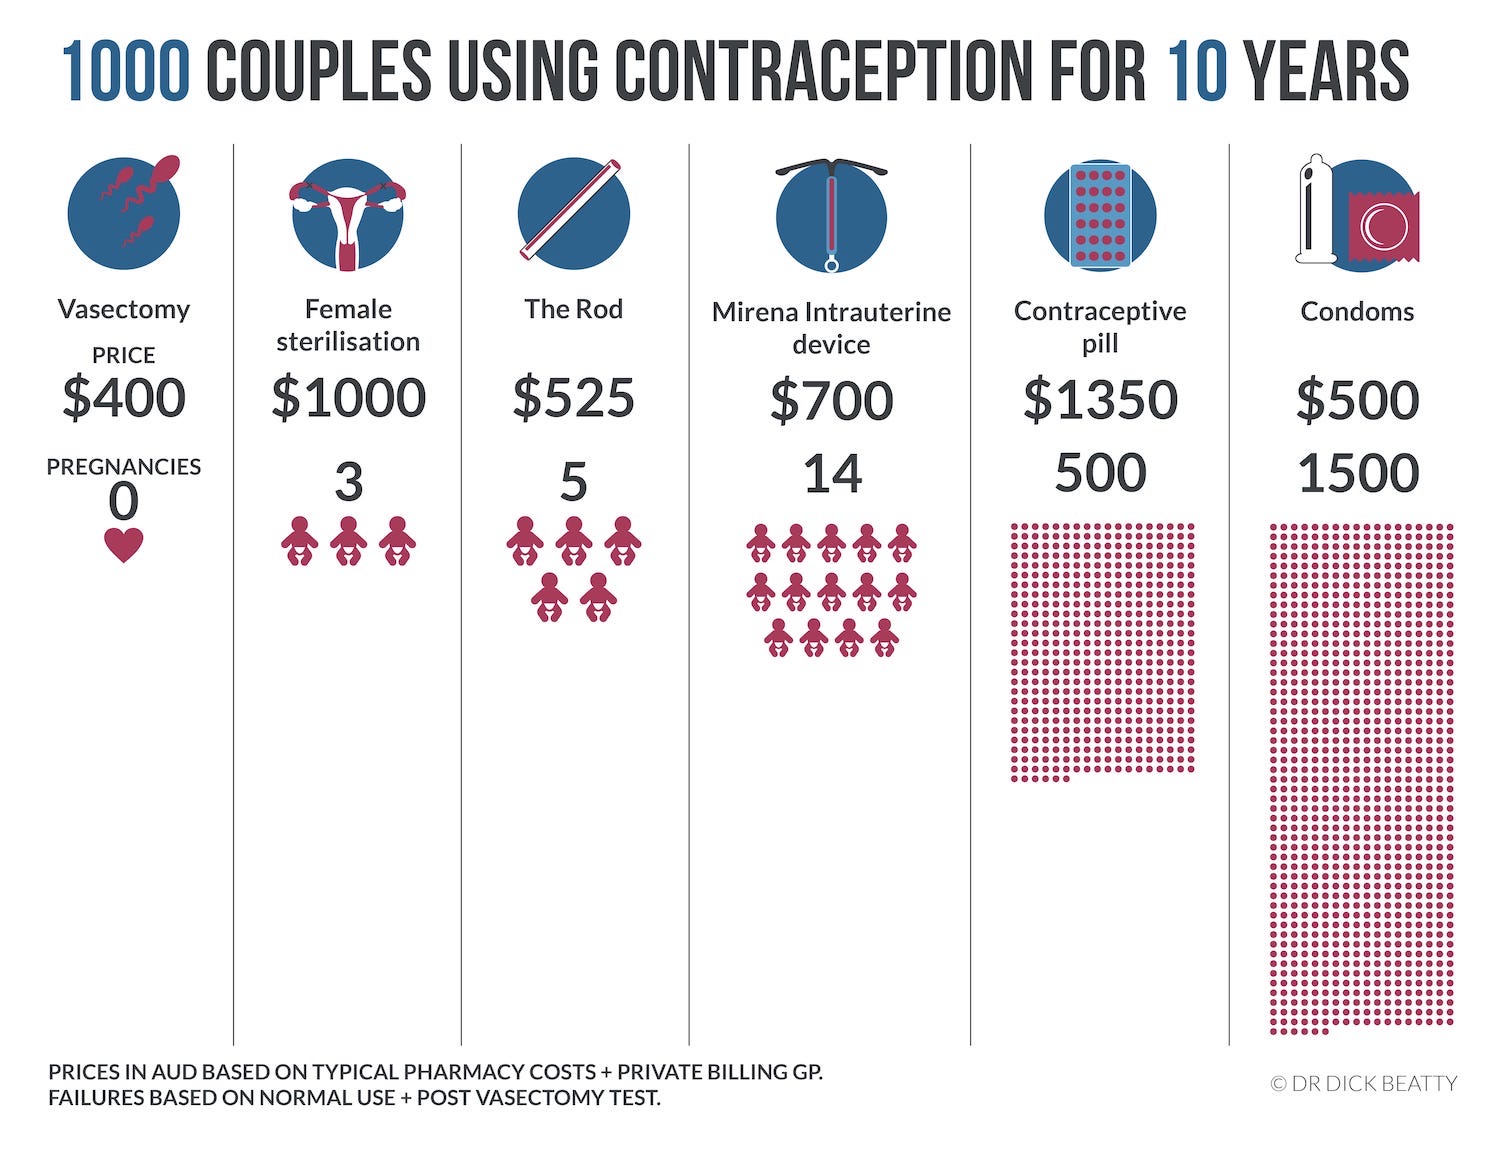 infographic - contraception comparison - vasectomy, sterilisation,rod,IUD,pill,condom - desktop